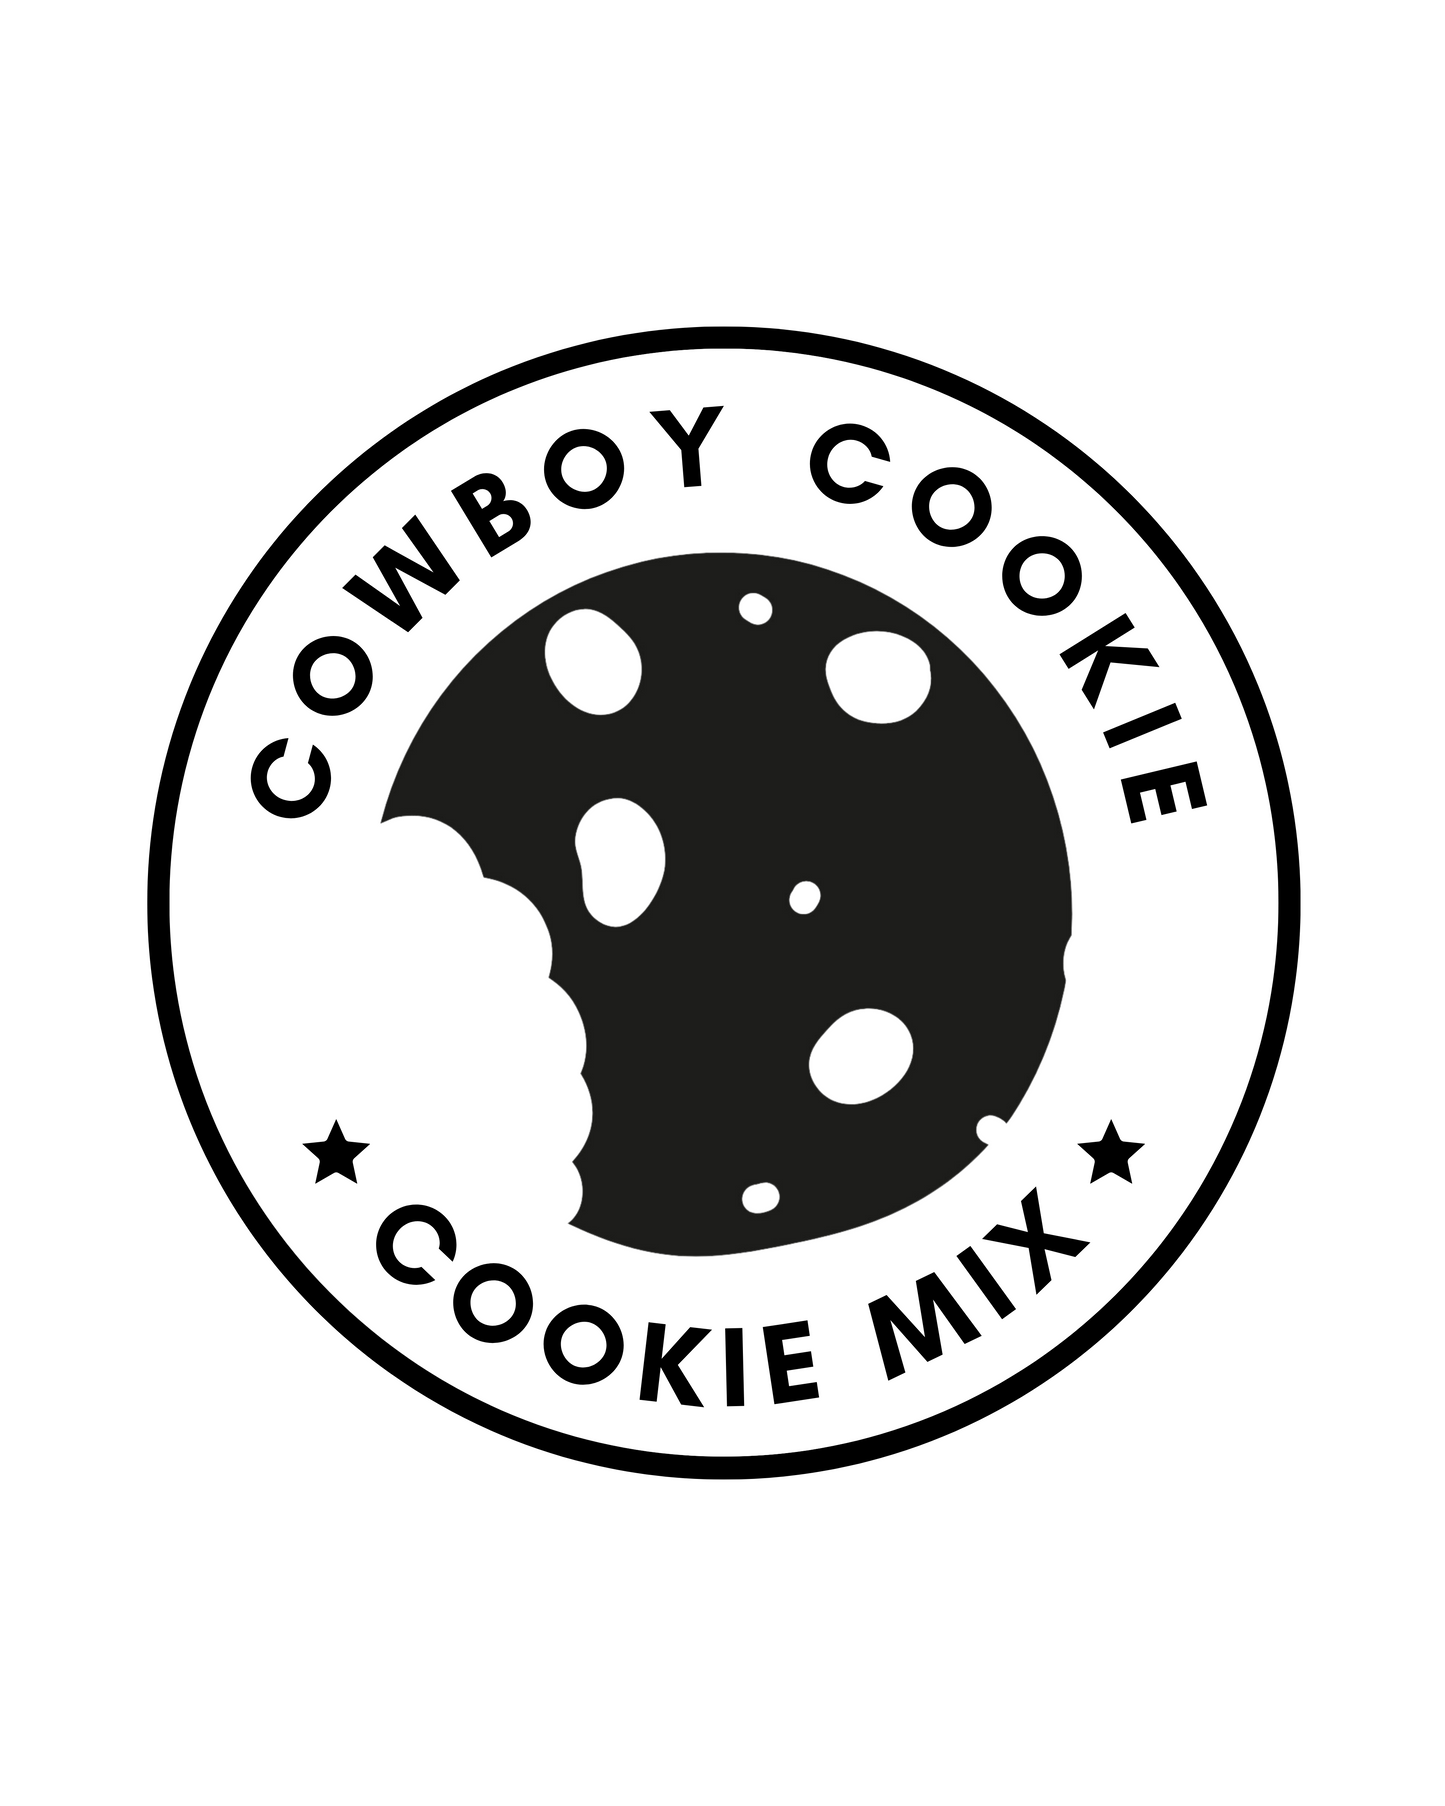 Cowboy Cookie Mix (New!)